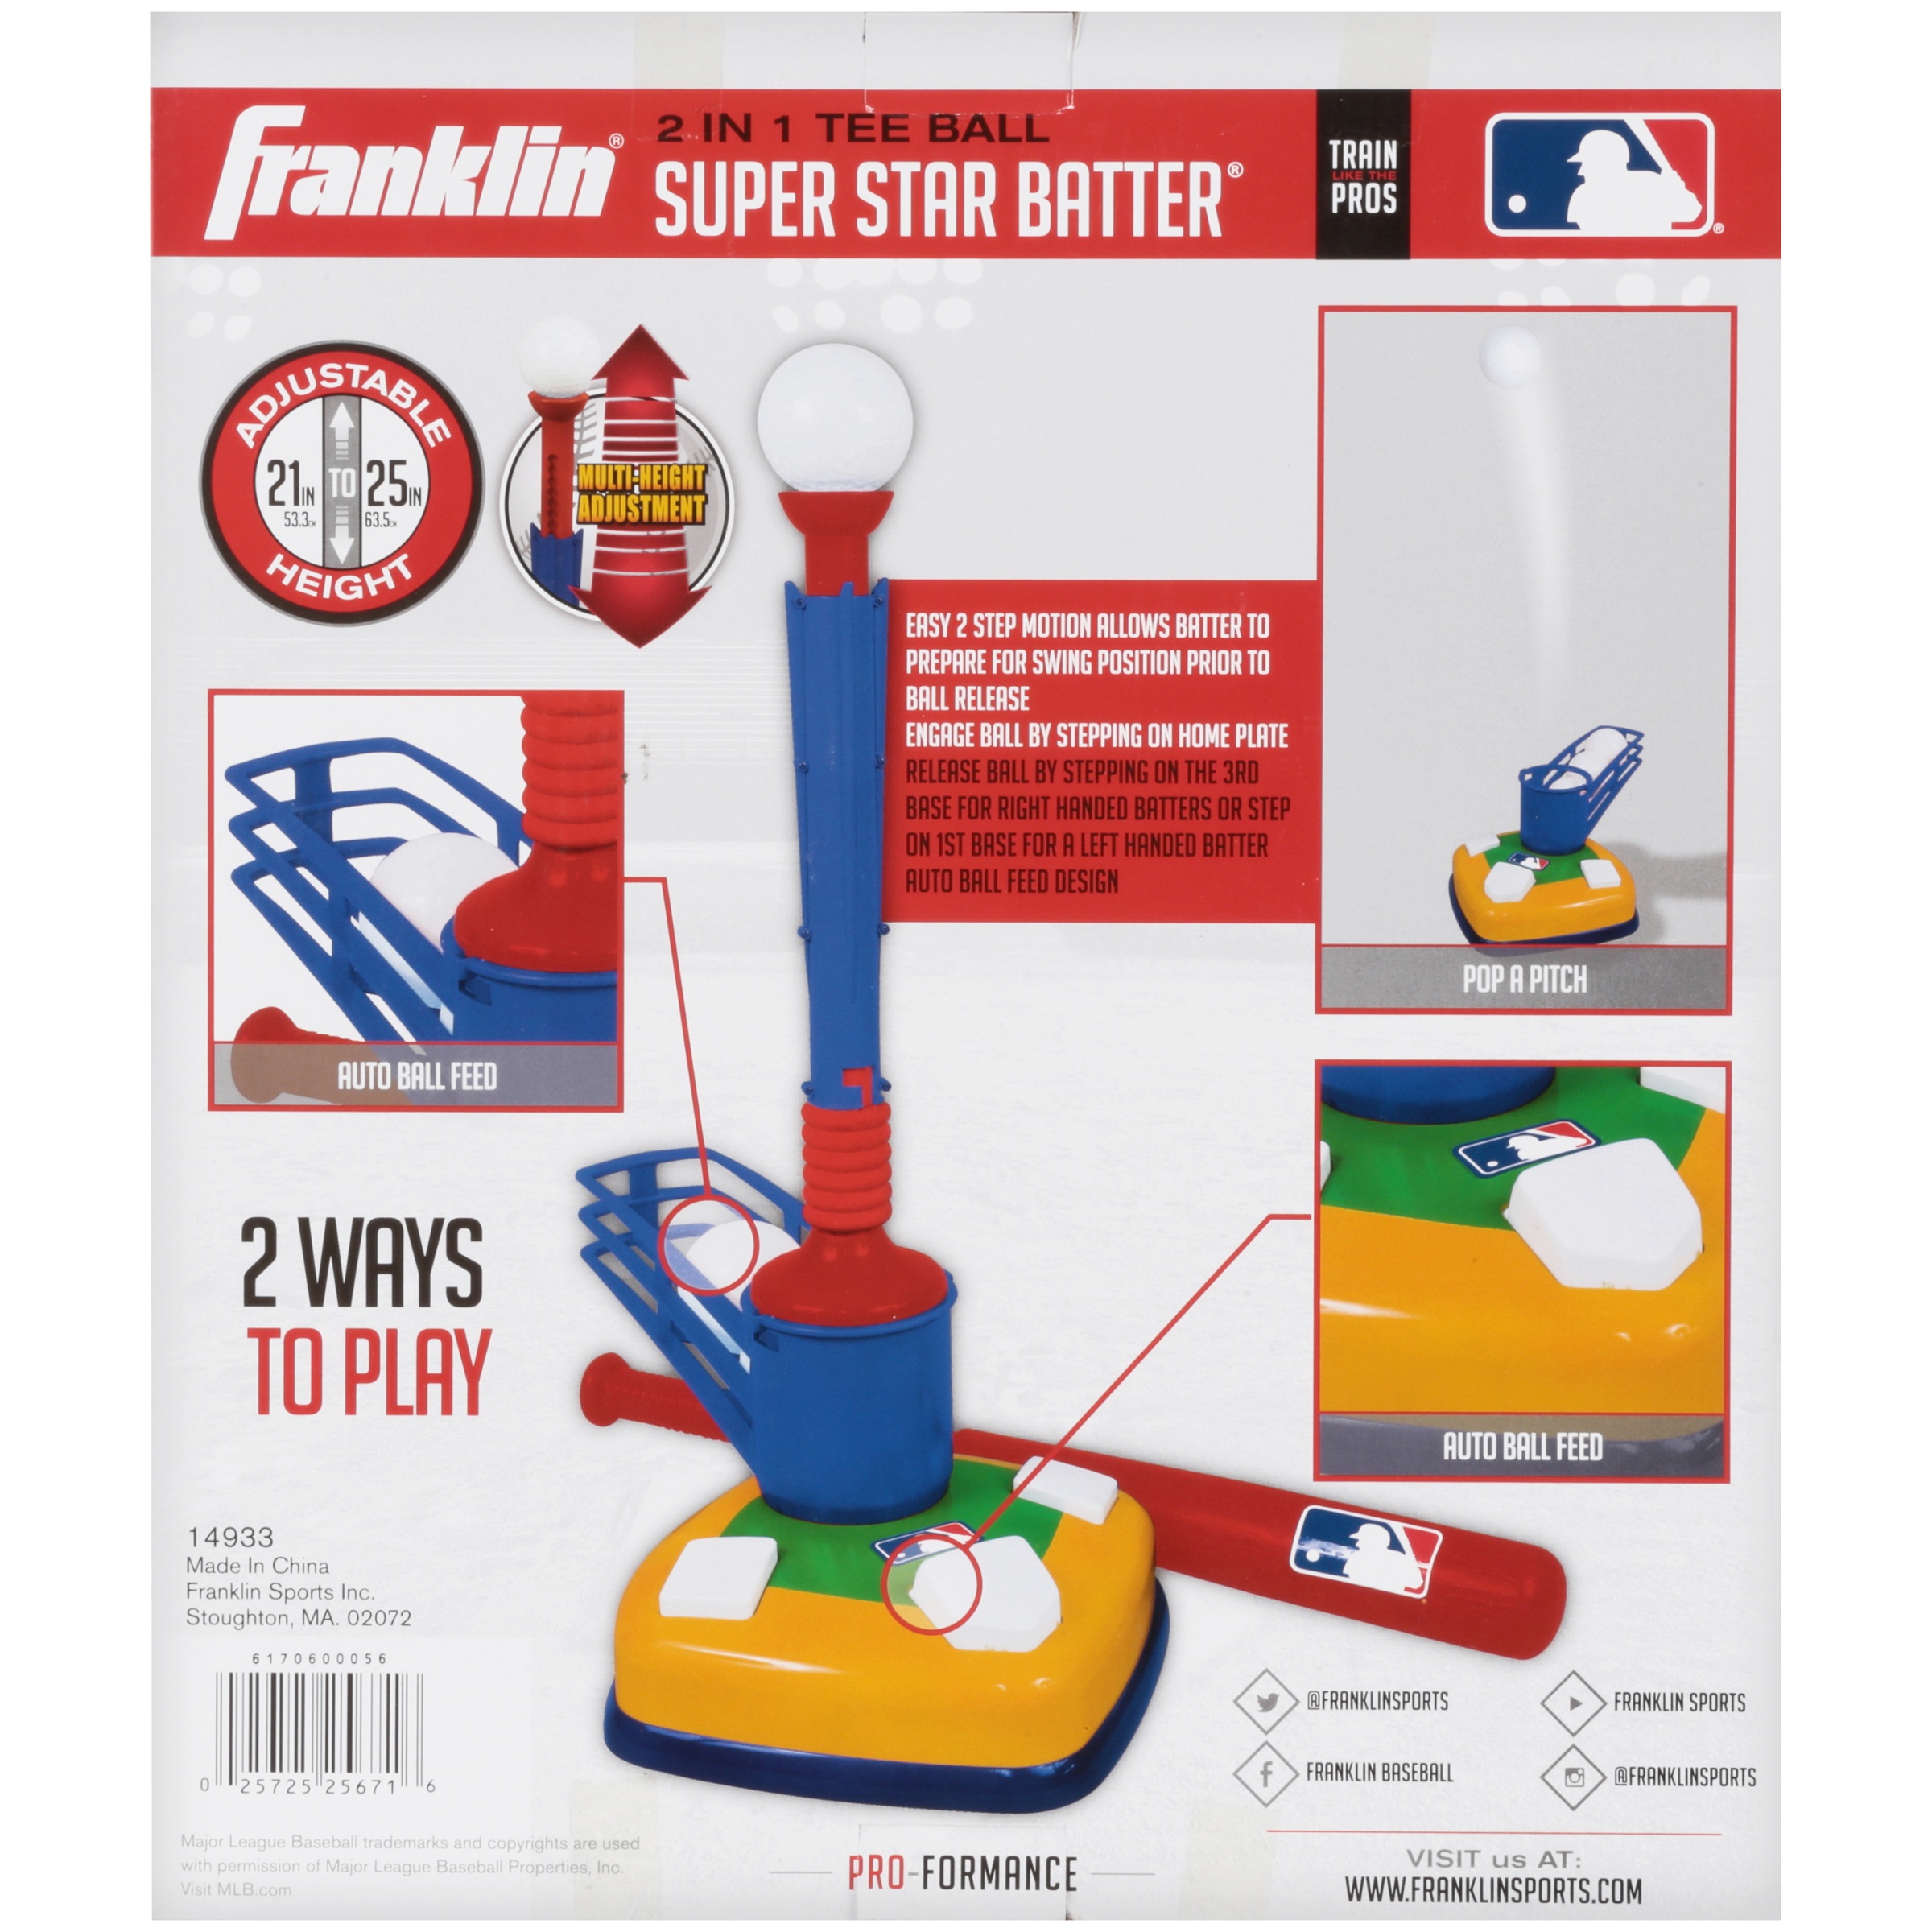 Franklin Sports Kids Teeball Tee + Pitching Machine - Super Star Batter - image 4 of 4